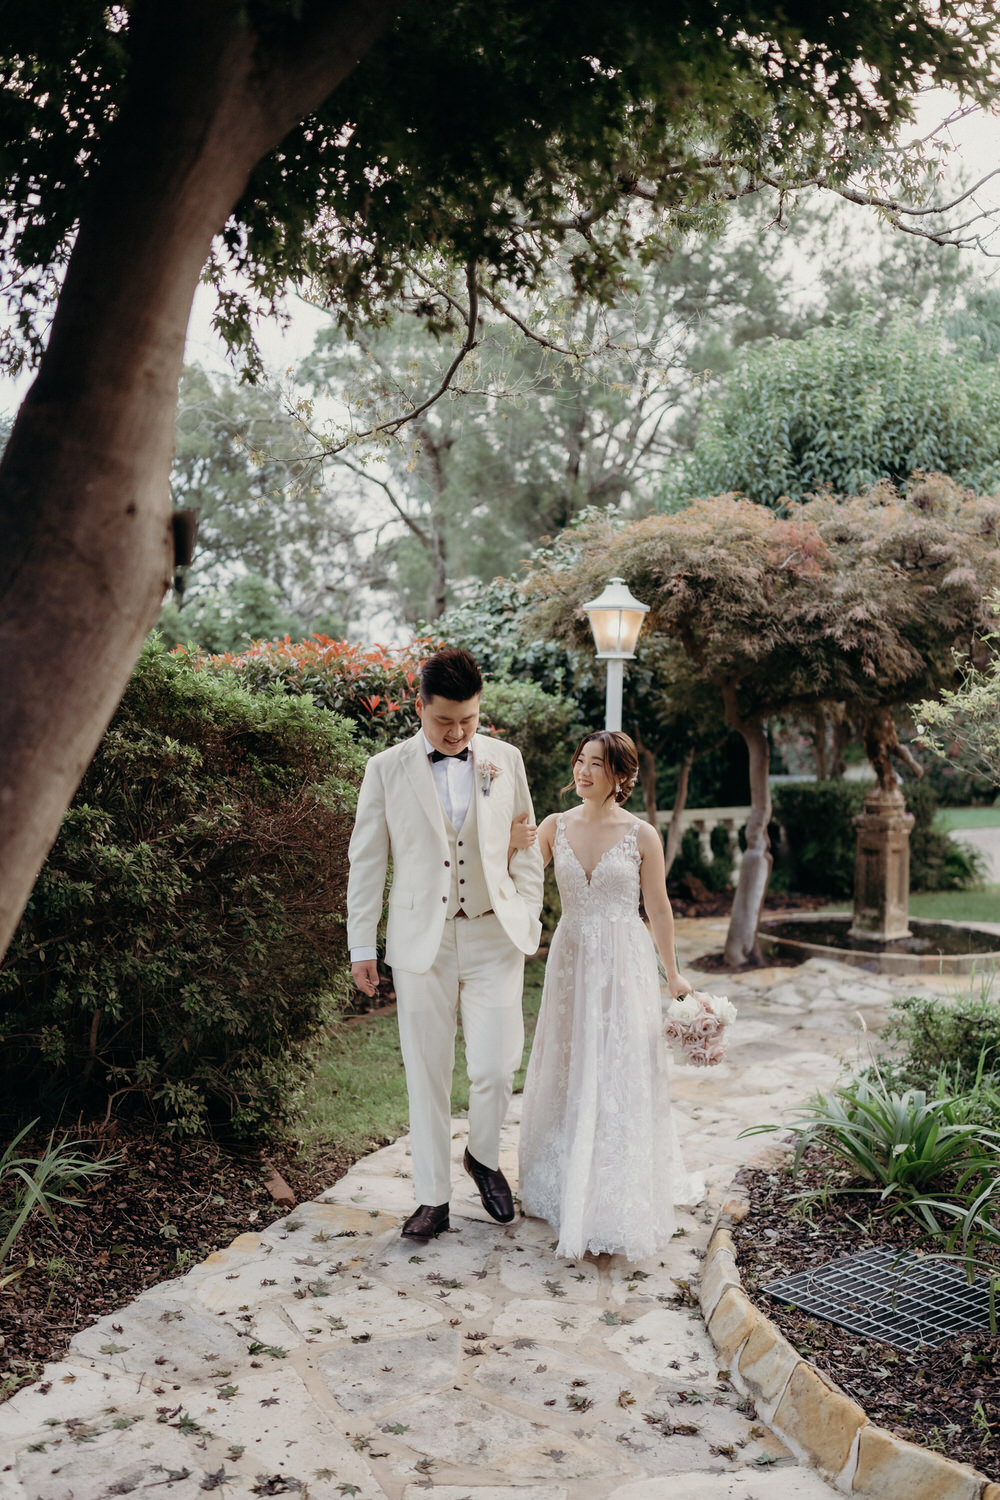 Daniel & Grace’s Dreamy Oatland’s House Wedding and Rose Garden Ceremony